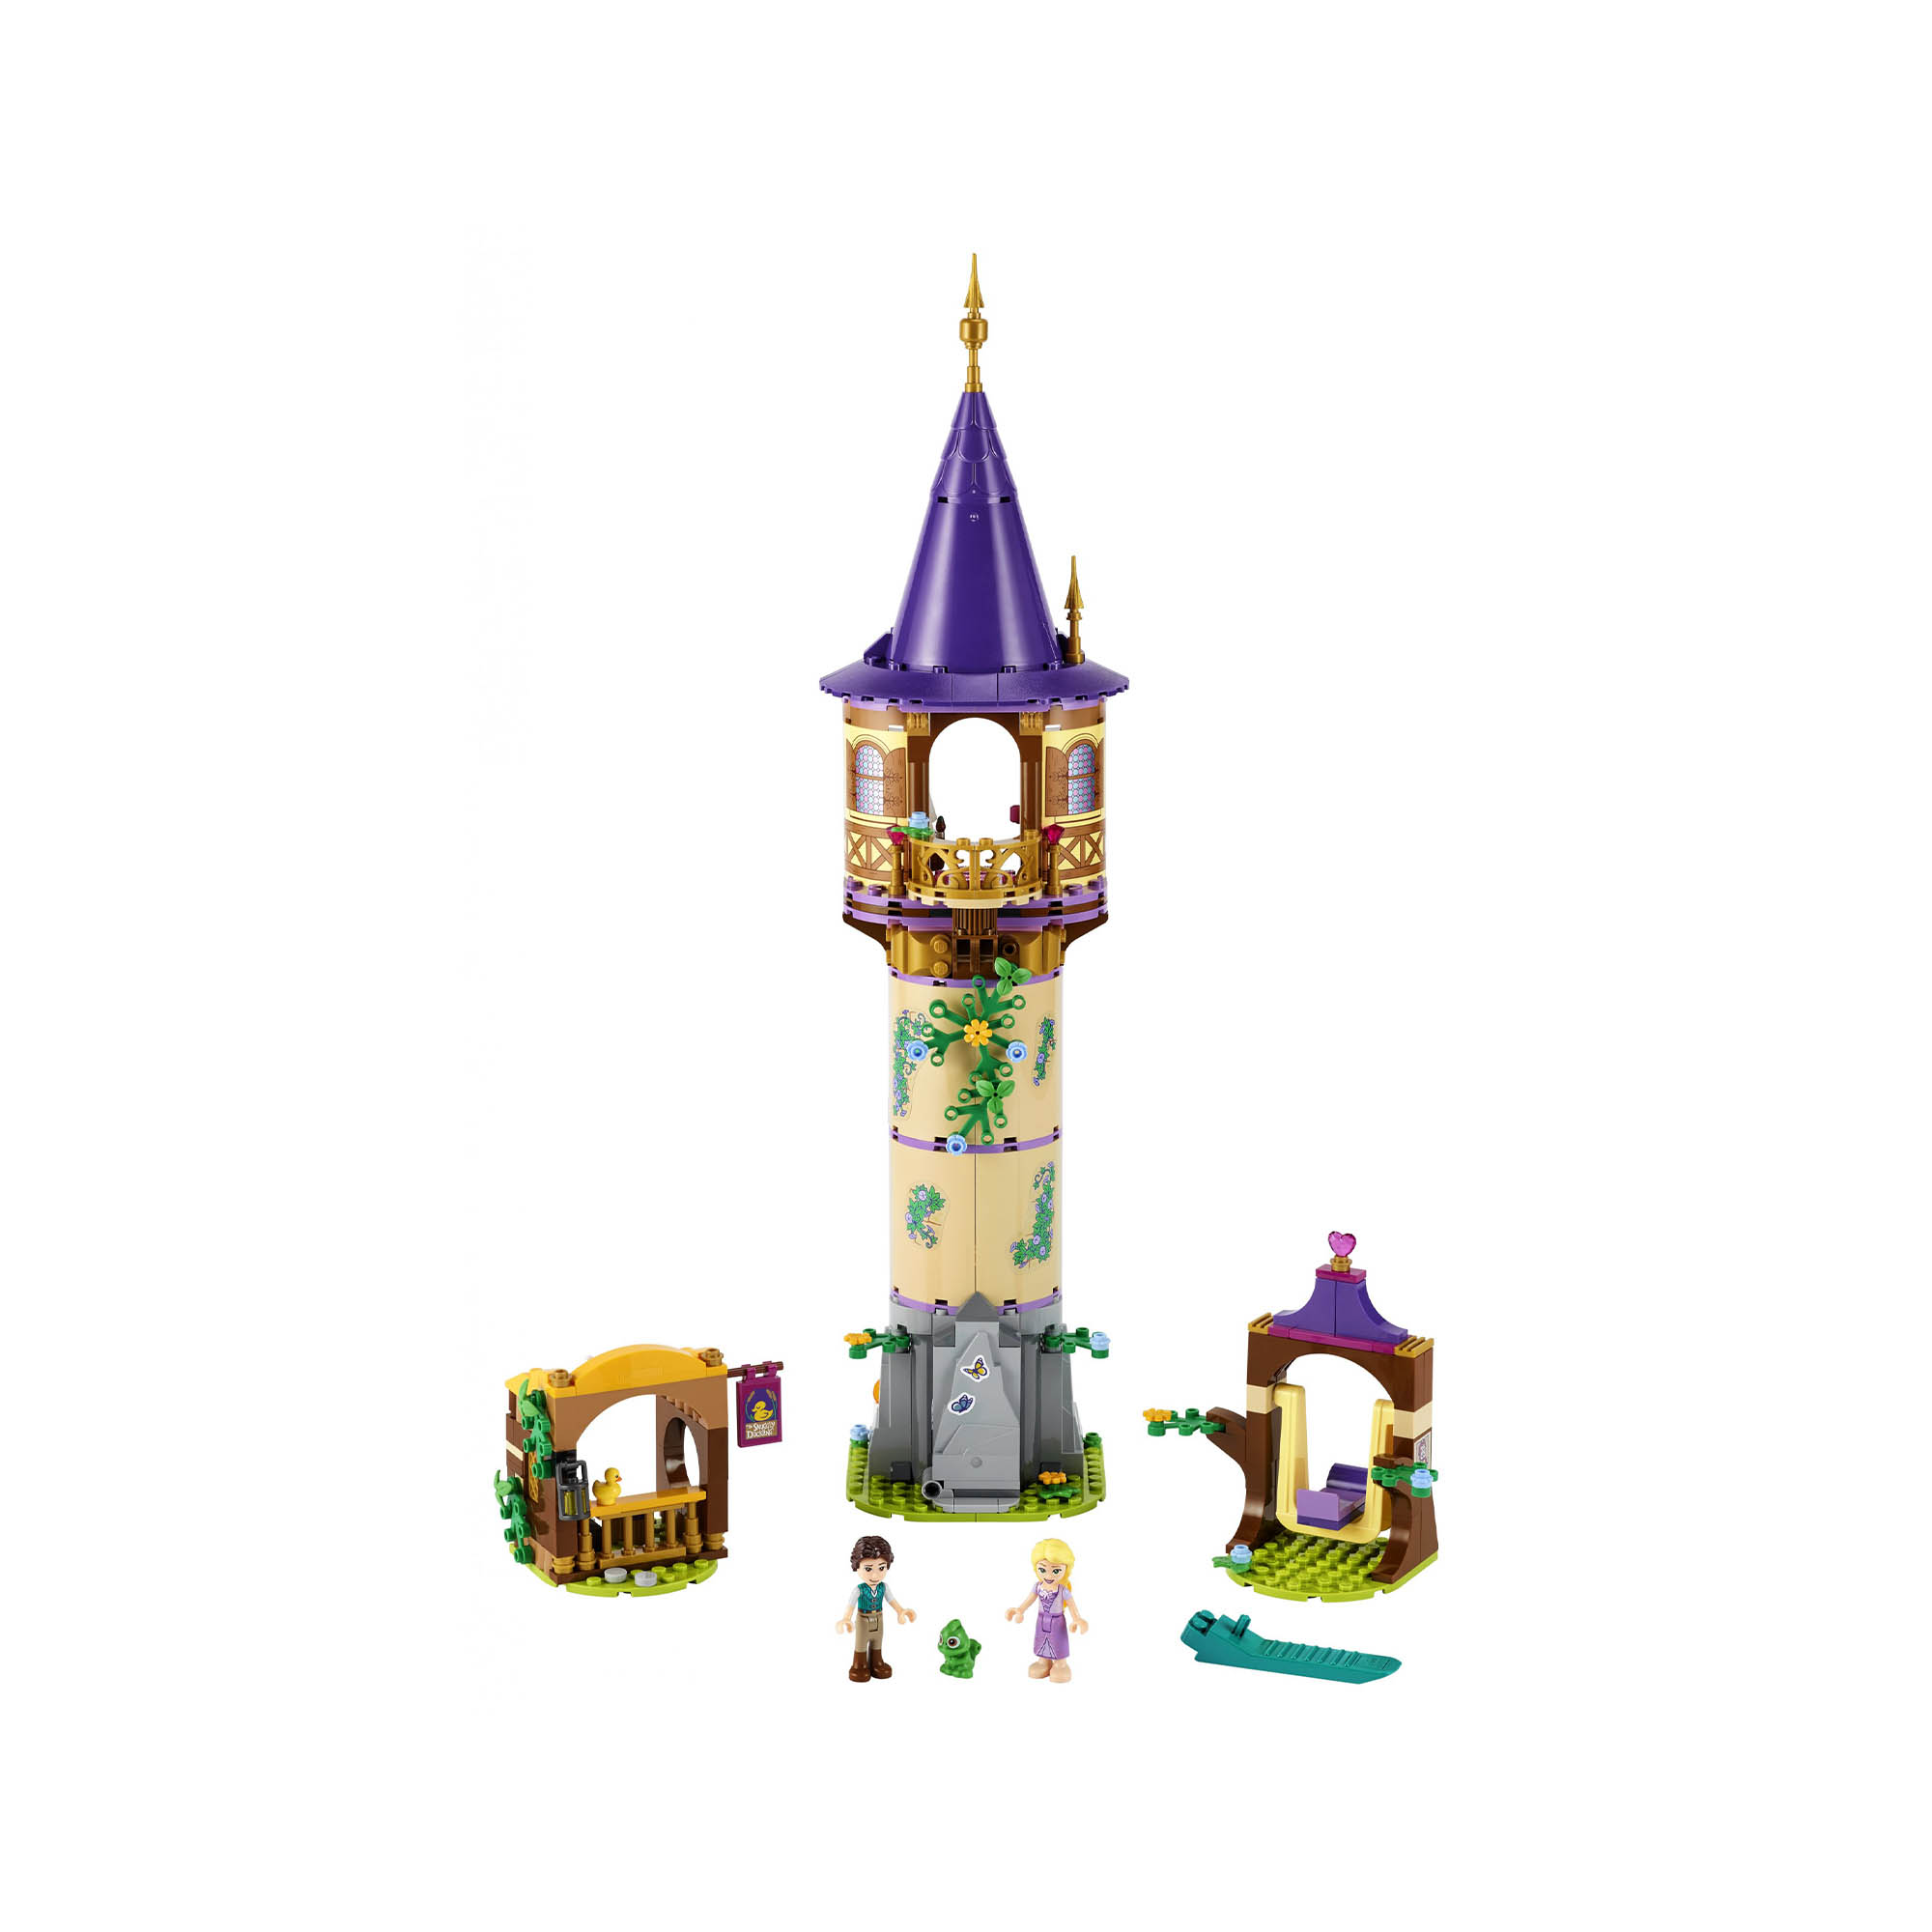 La torre di Rapunzel 43187, , large